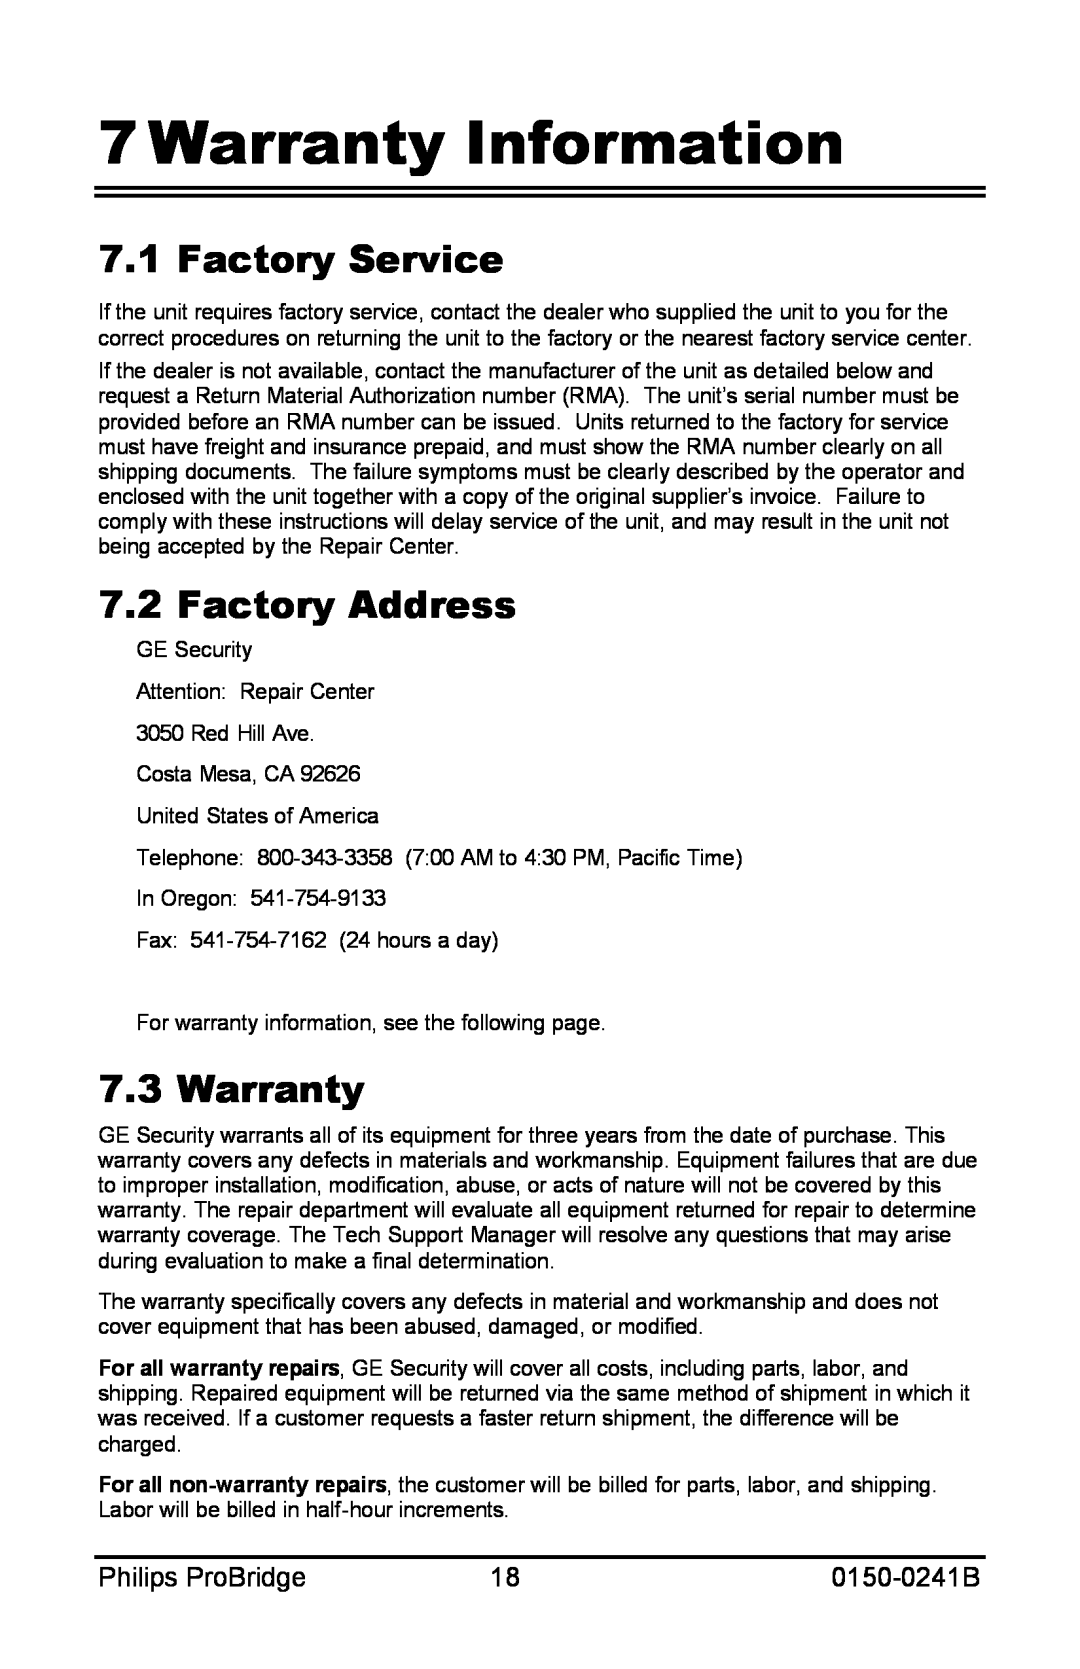 Philips 0150-0241B user manual Warranty Information, Factory Service, Factory Address, Philips ProBridge 